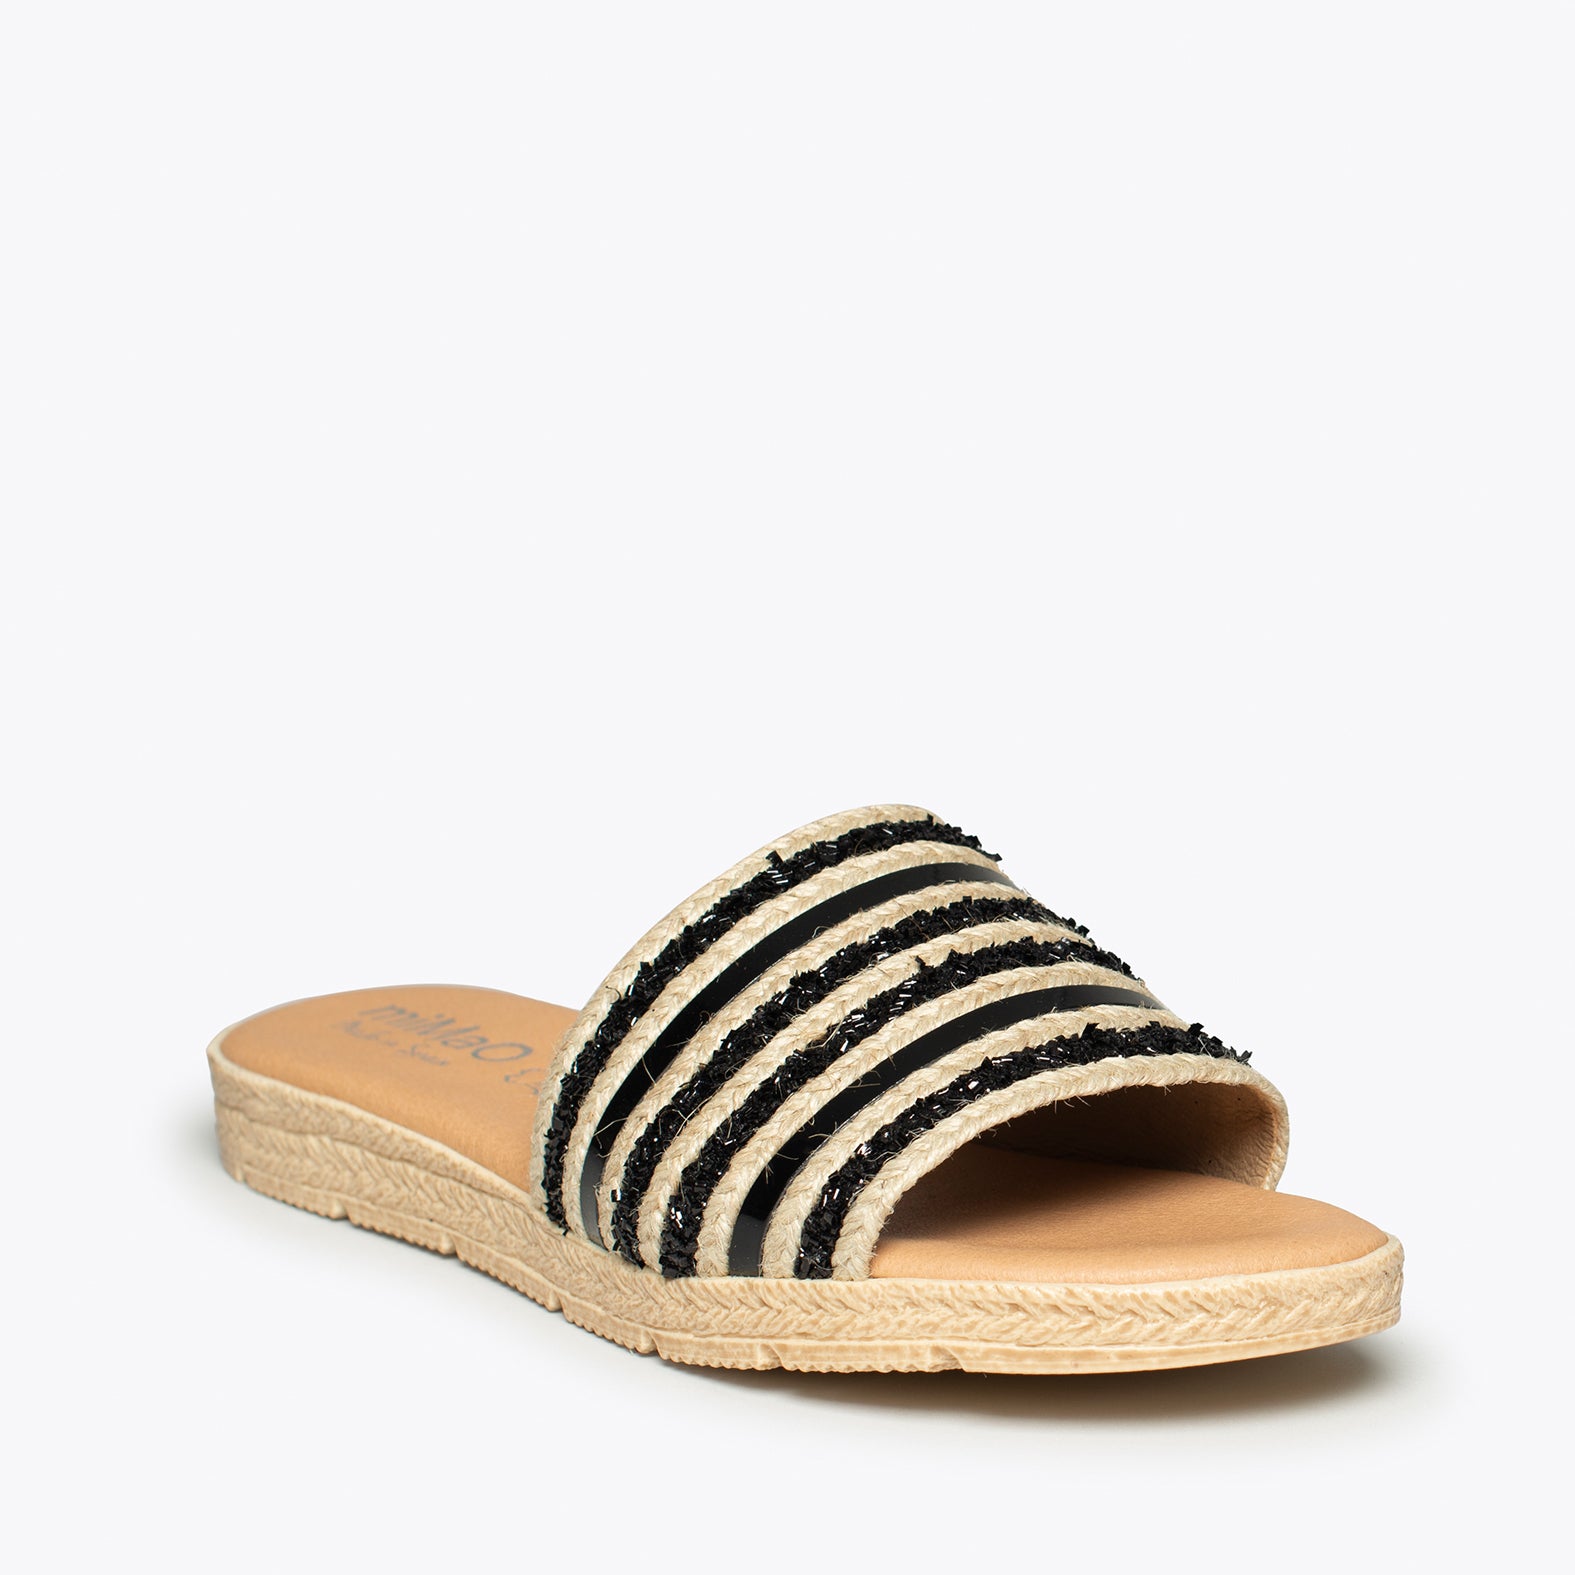 MOON – BLACK flat sandal with metallic details